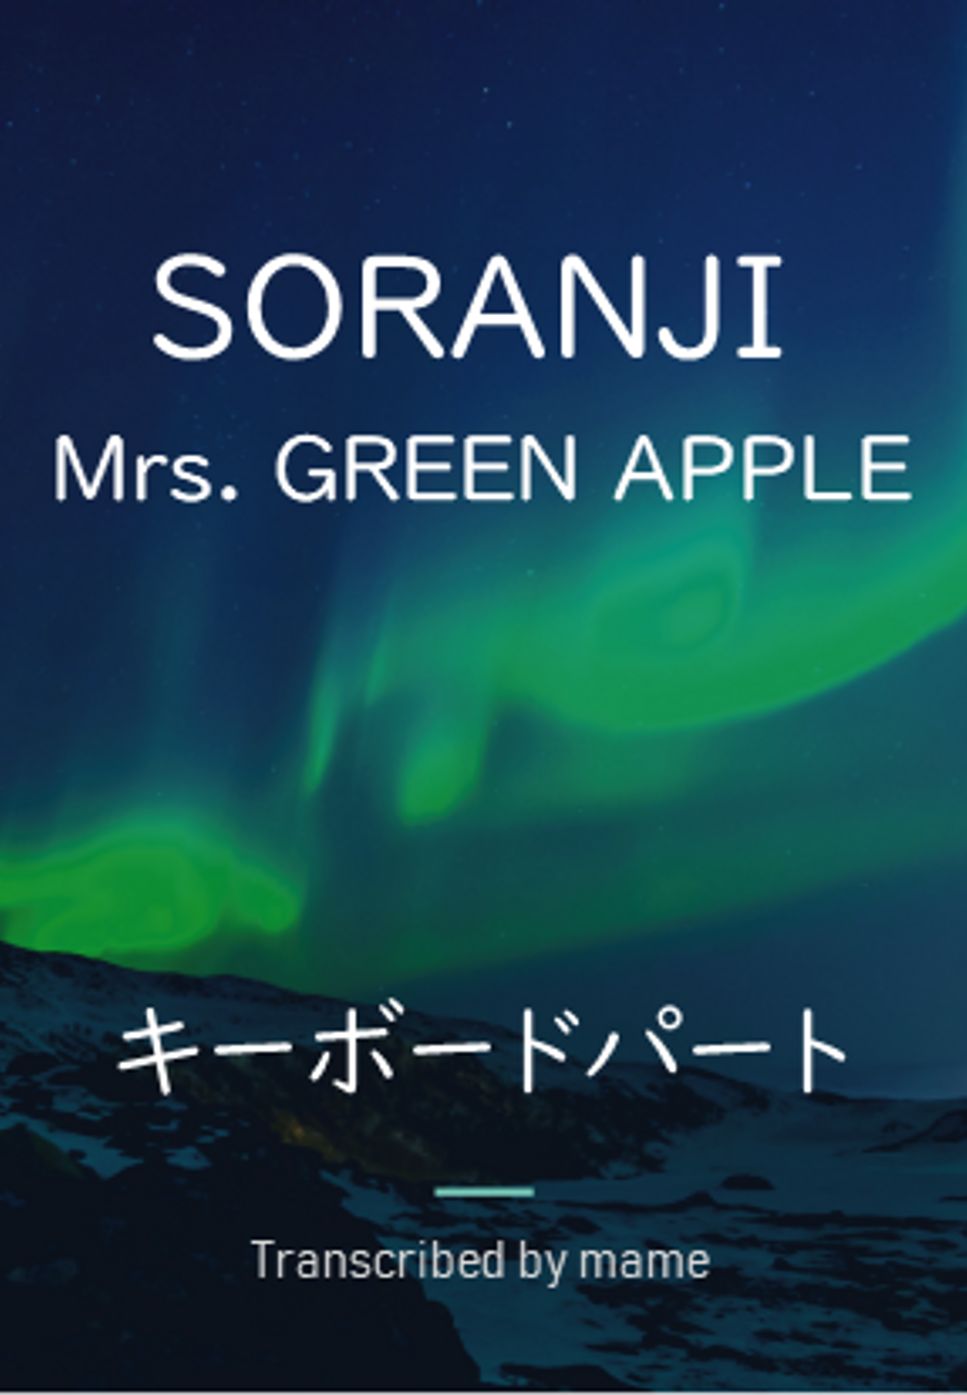 Mrs. GREEN APPLE - SORANJI (keyboard part) by mame